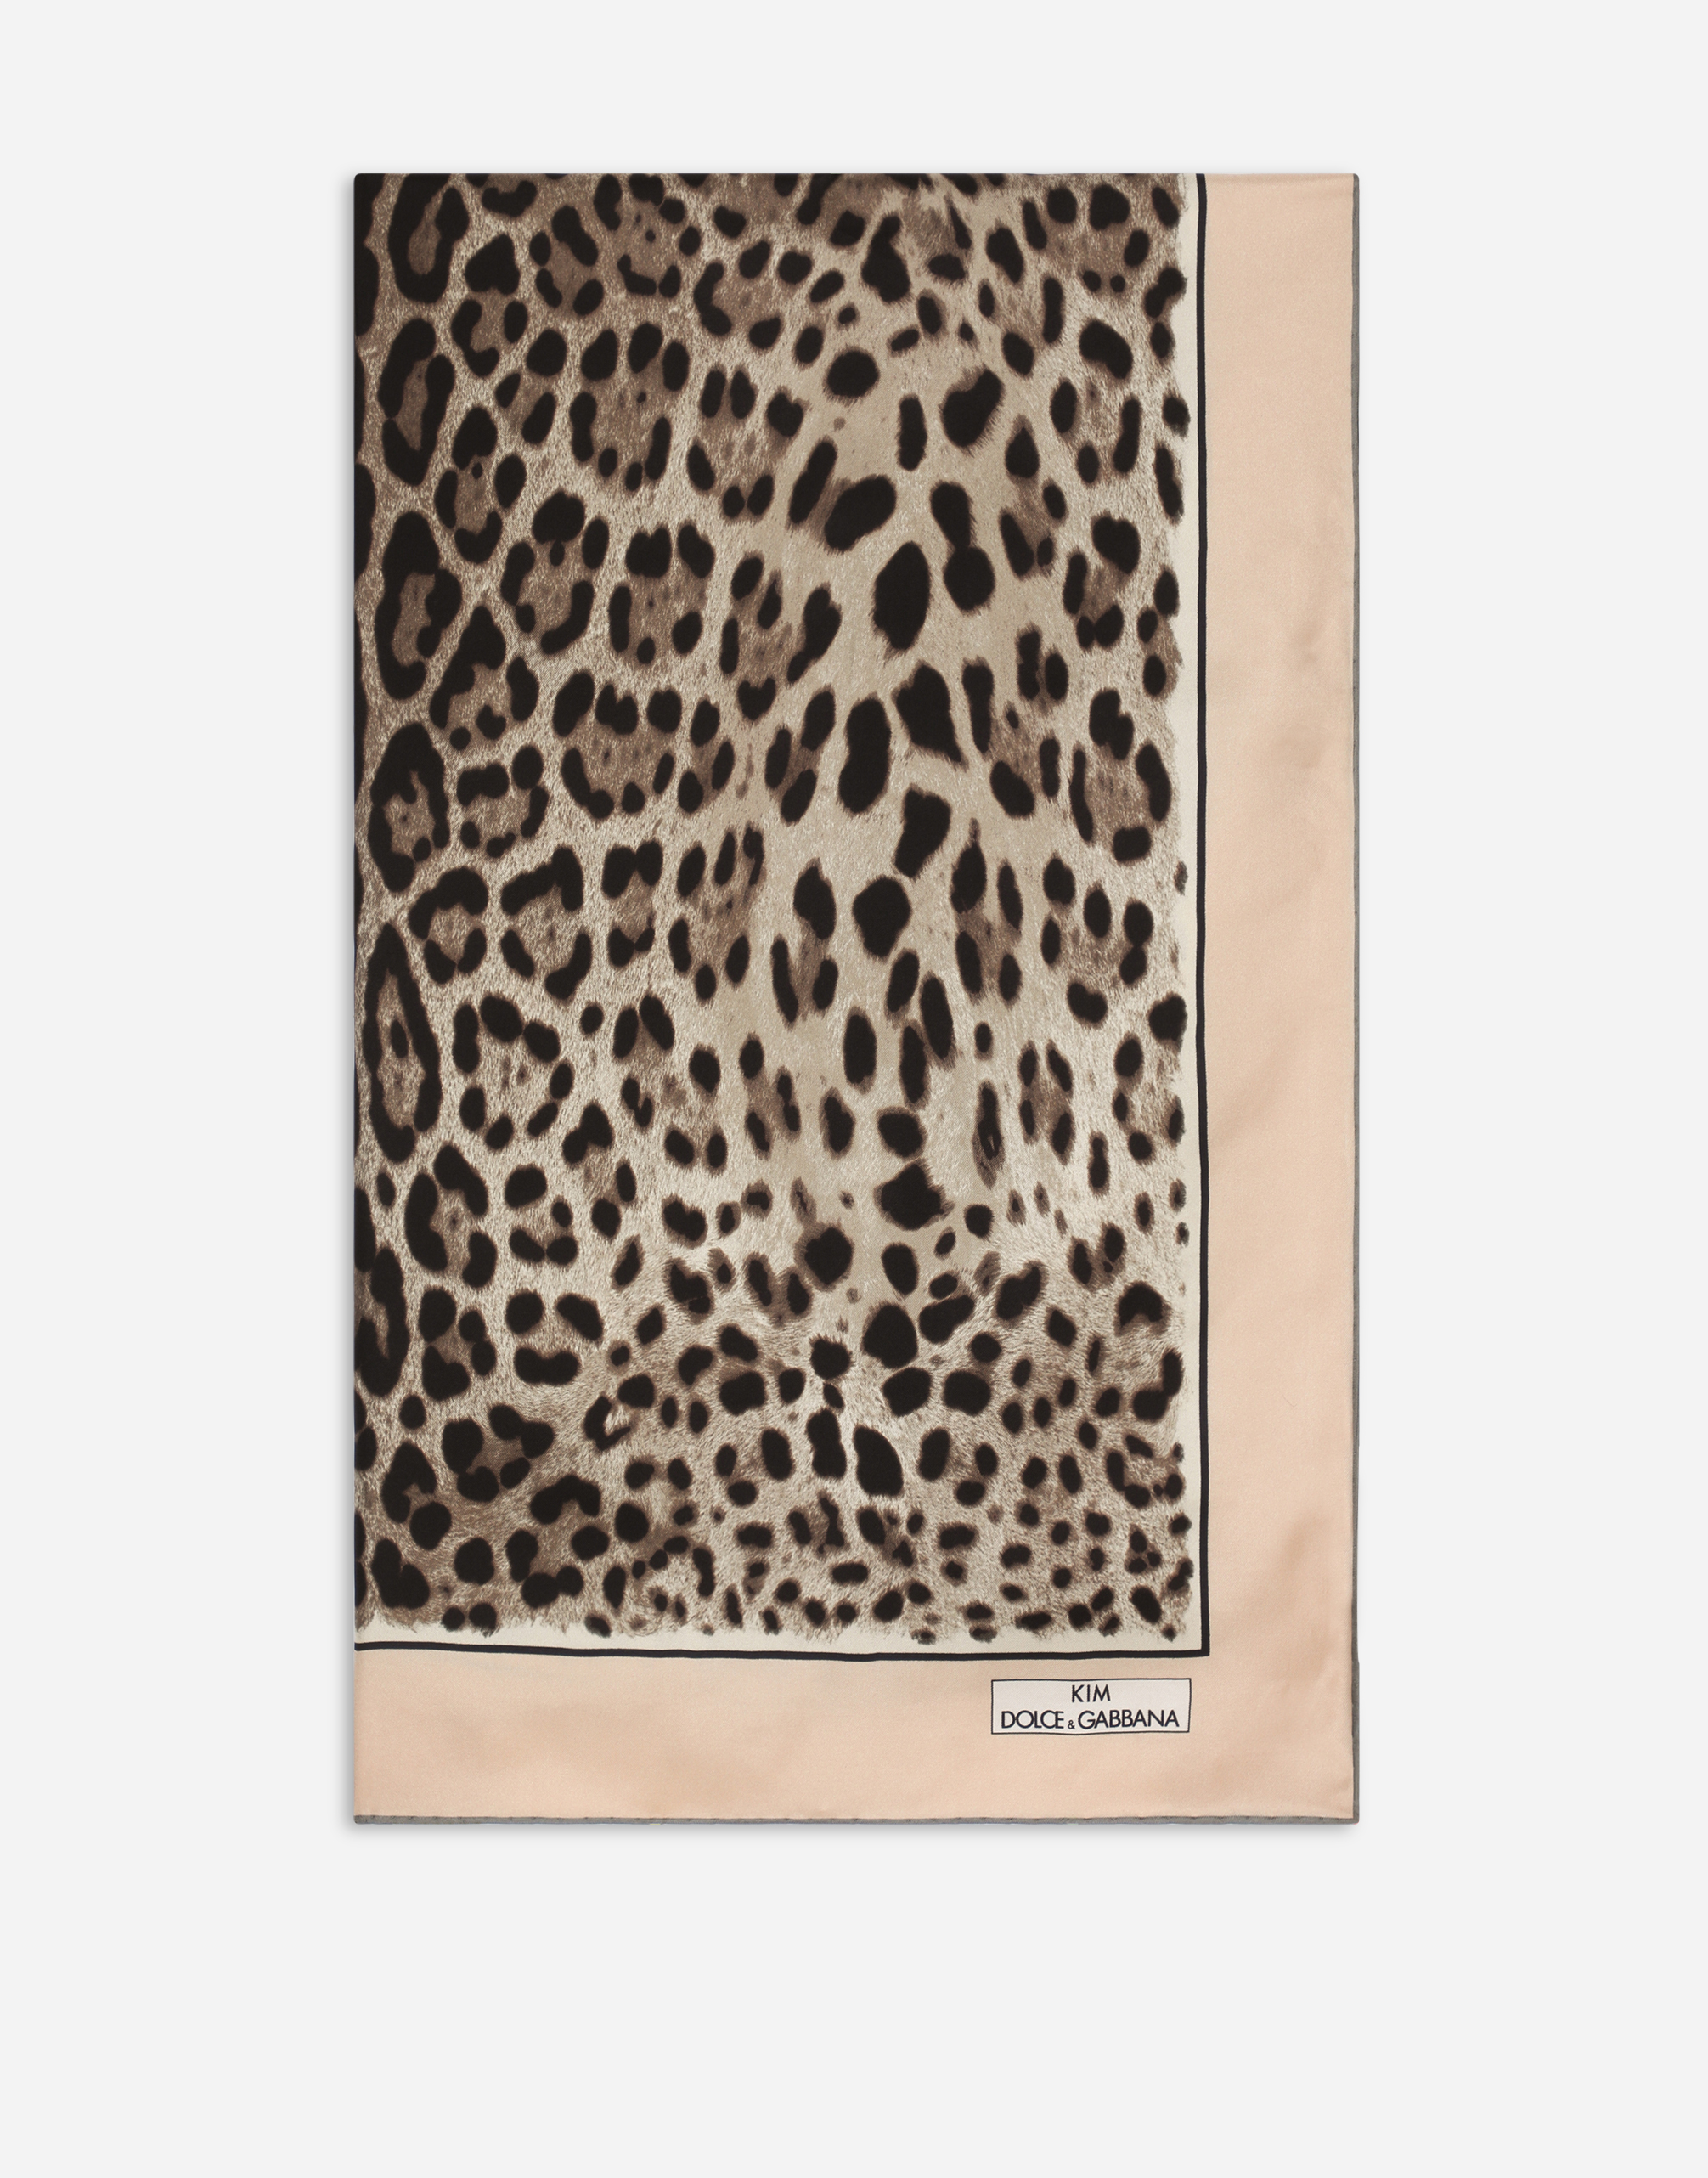 KIM DOLCE&GABBANA Leopard-print twill scarf (90 x 90) in Animal Print